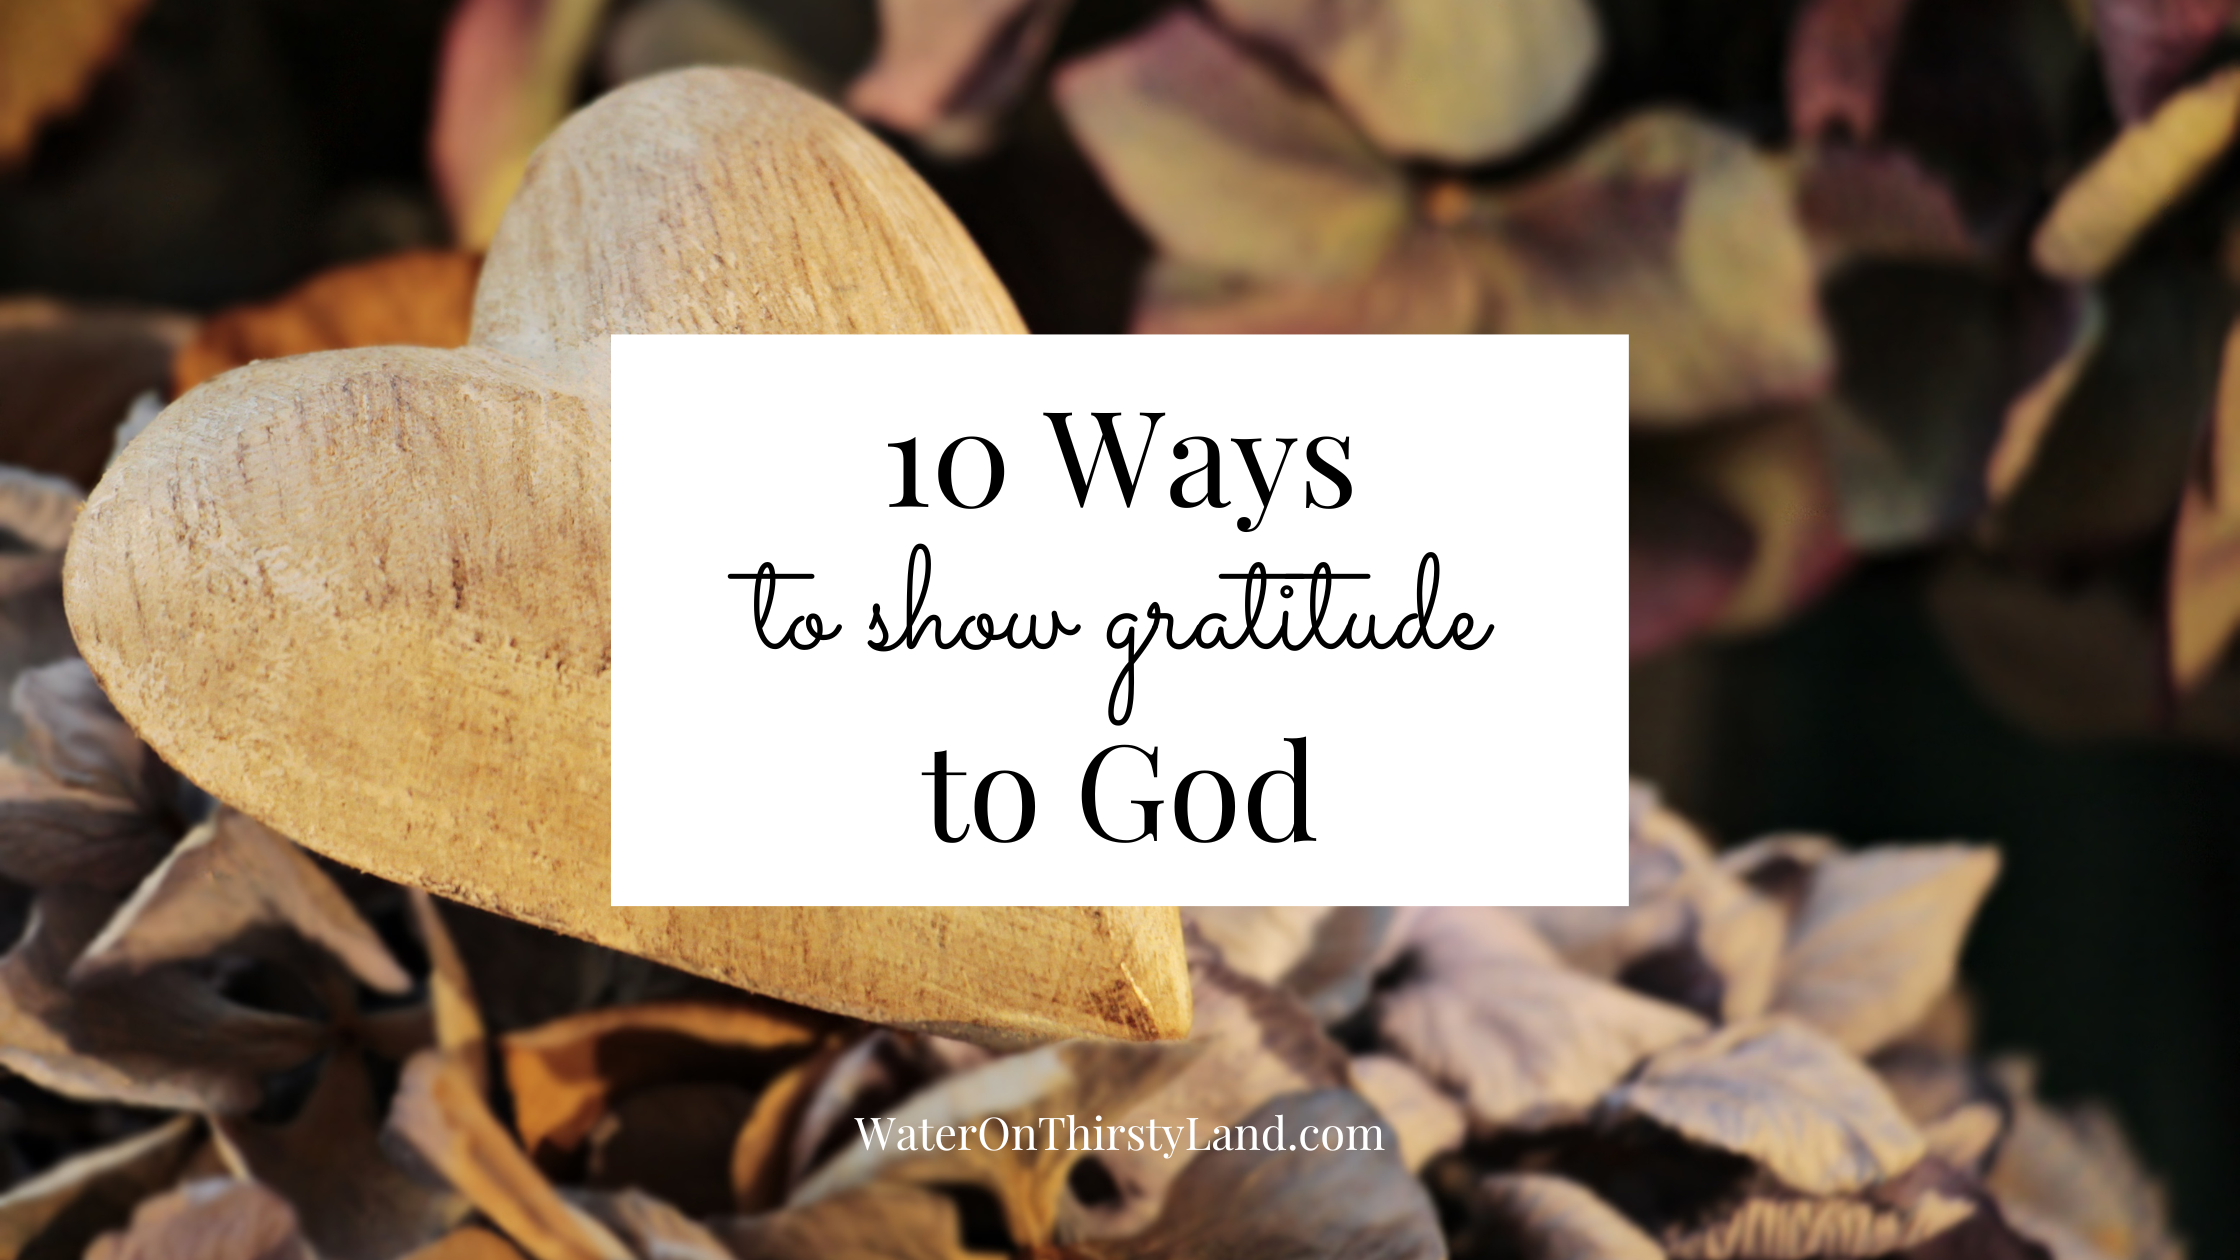 10 Ways to show gratitude to God